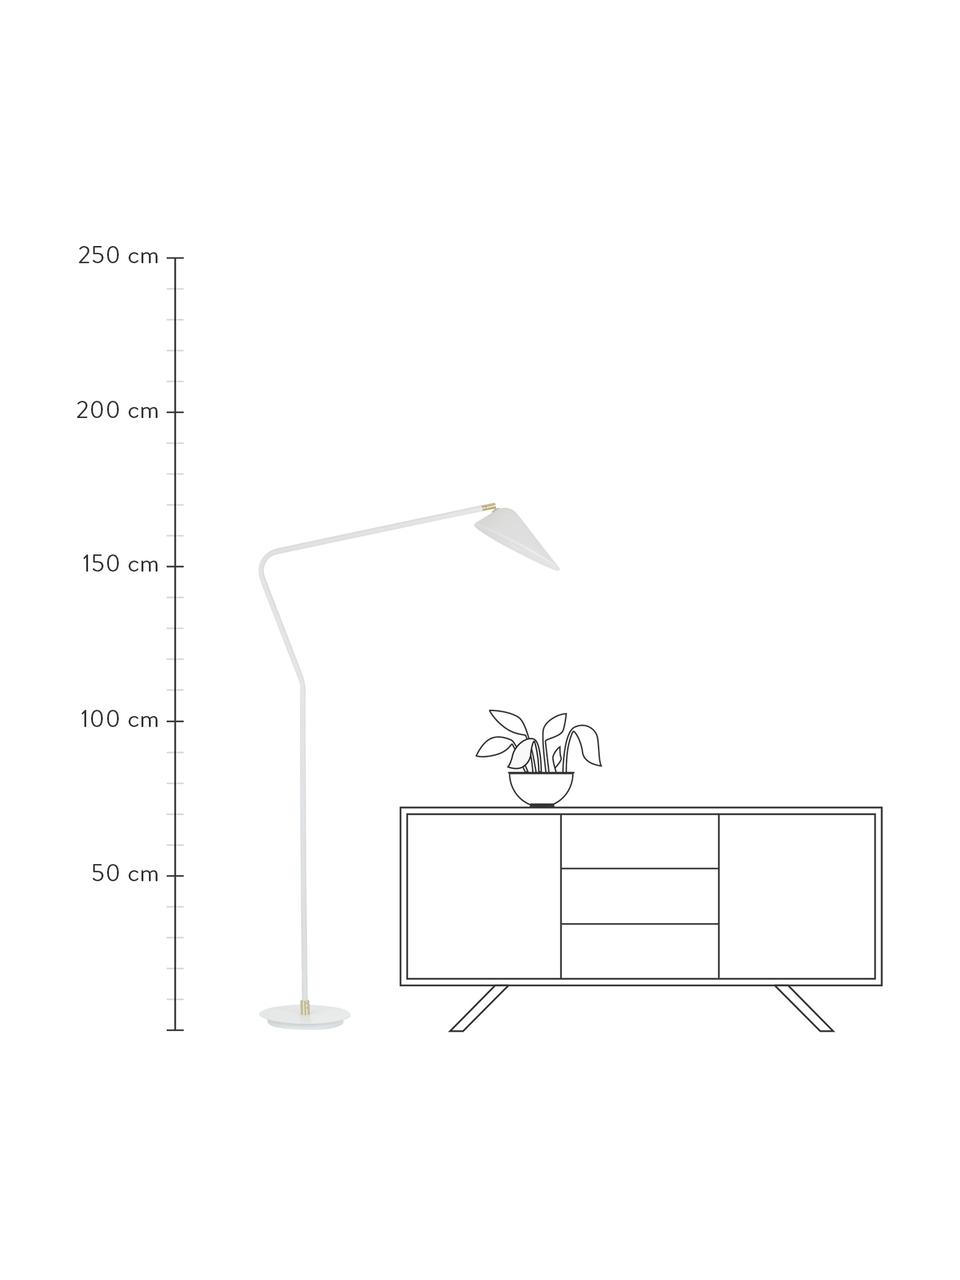 Velká čtecí lampa Neron, Bílá, Š 105 cm, V 171 cm